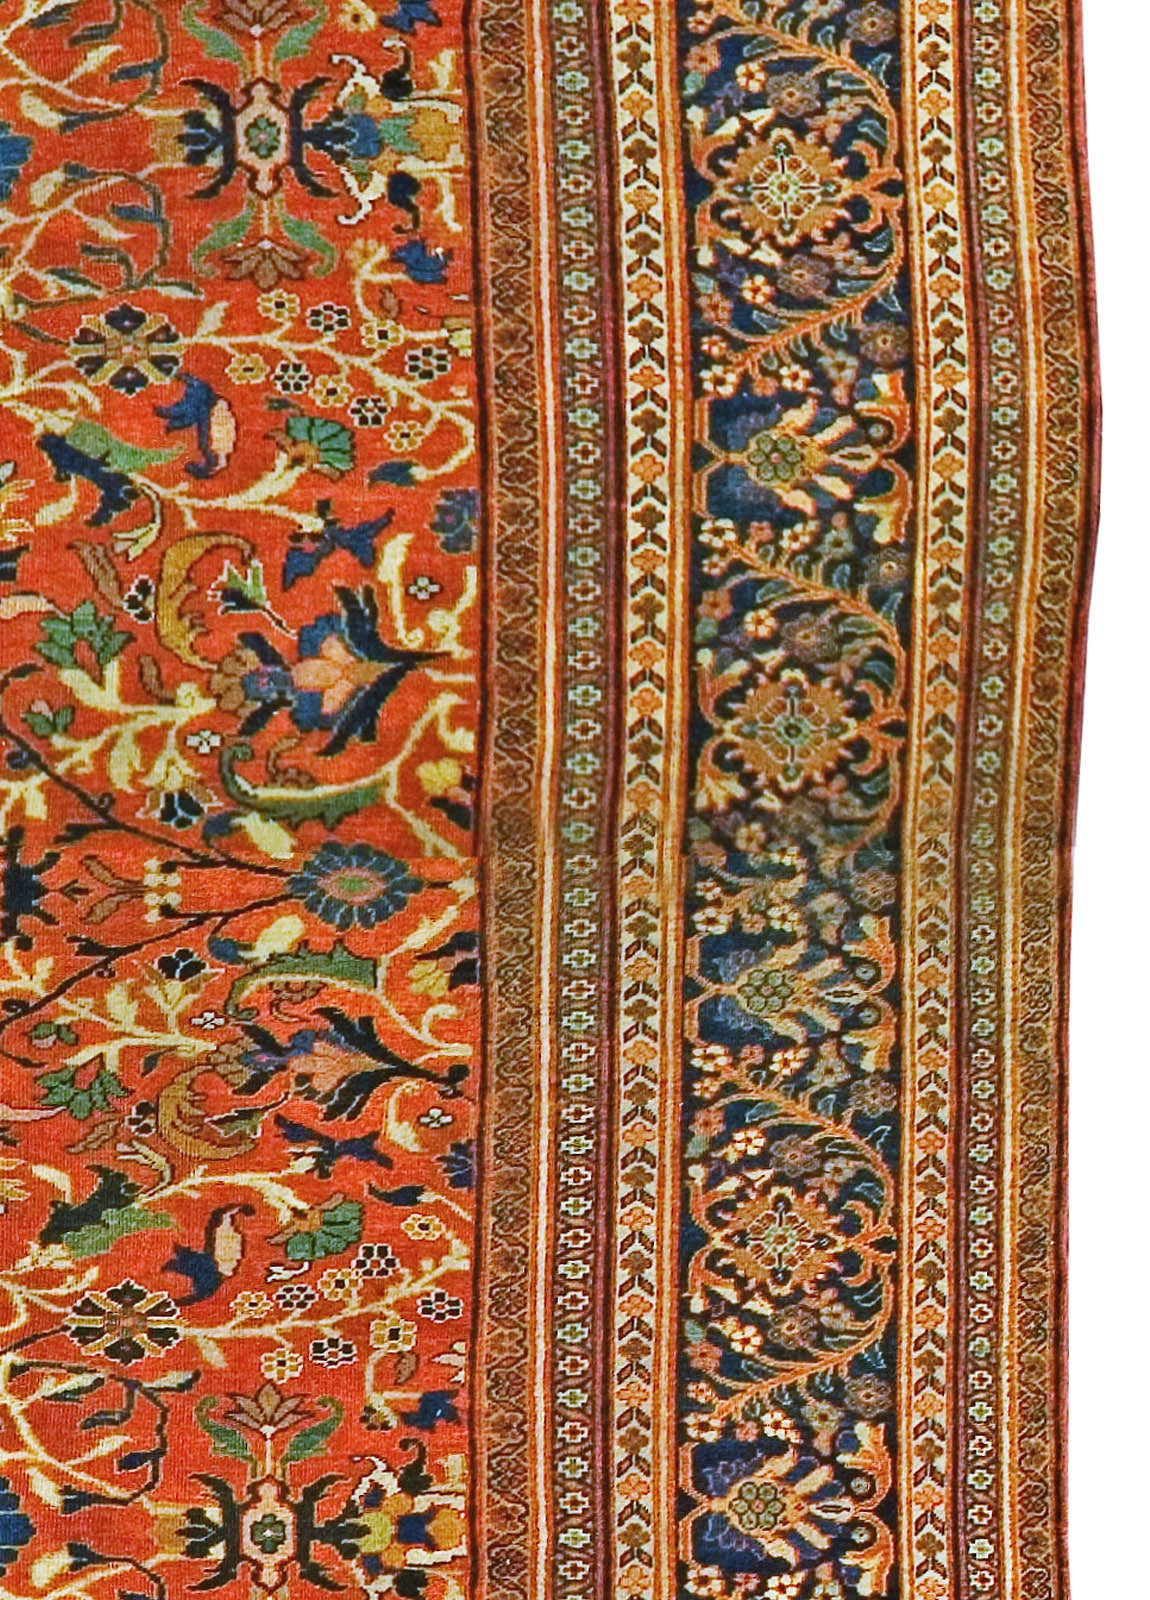 19th Century Antique Persian Sultanabad Rug